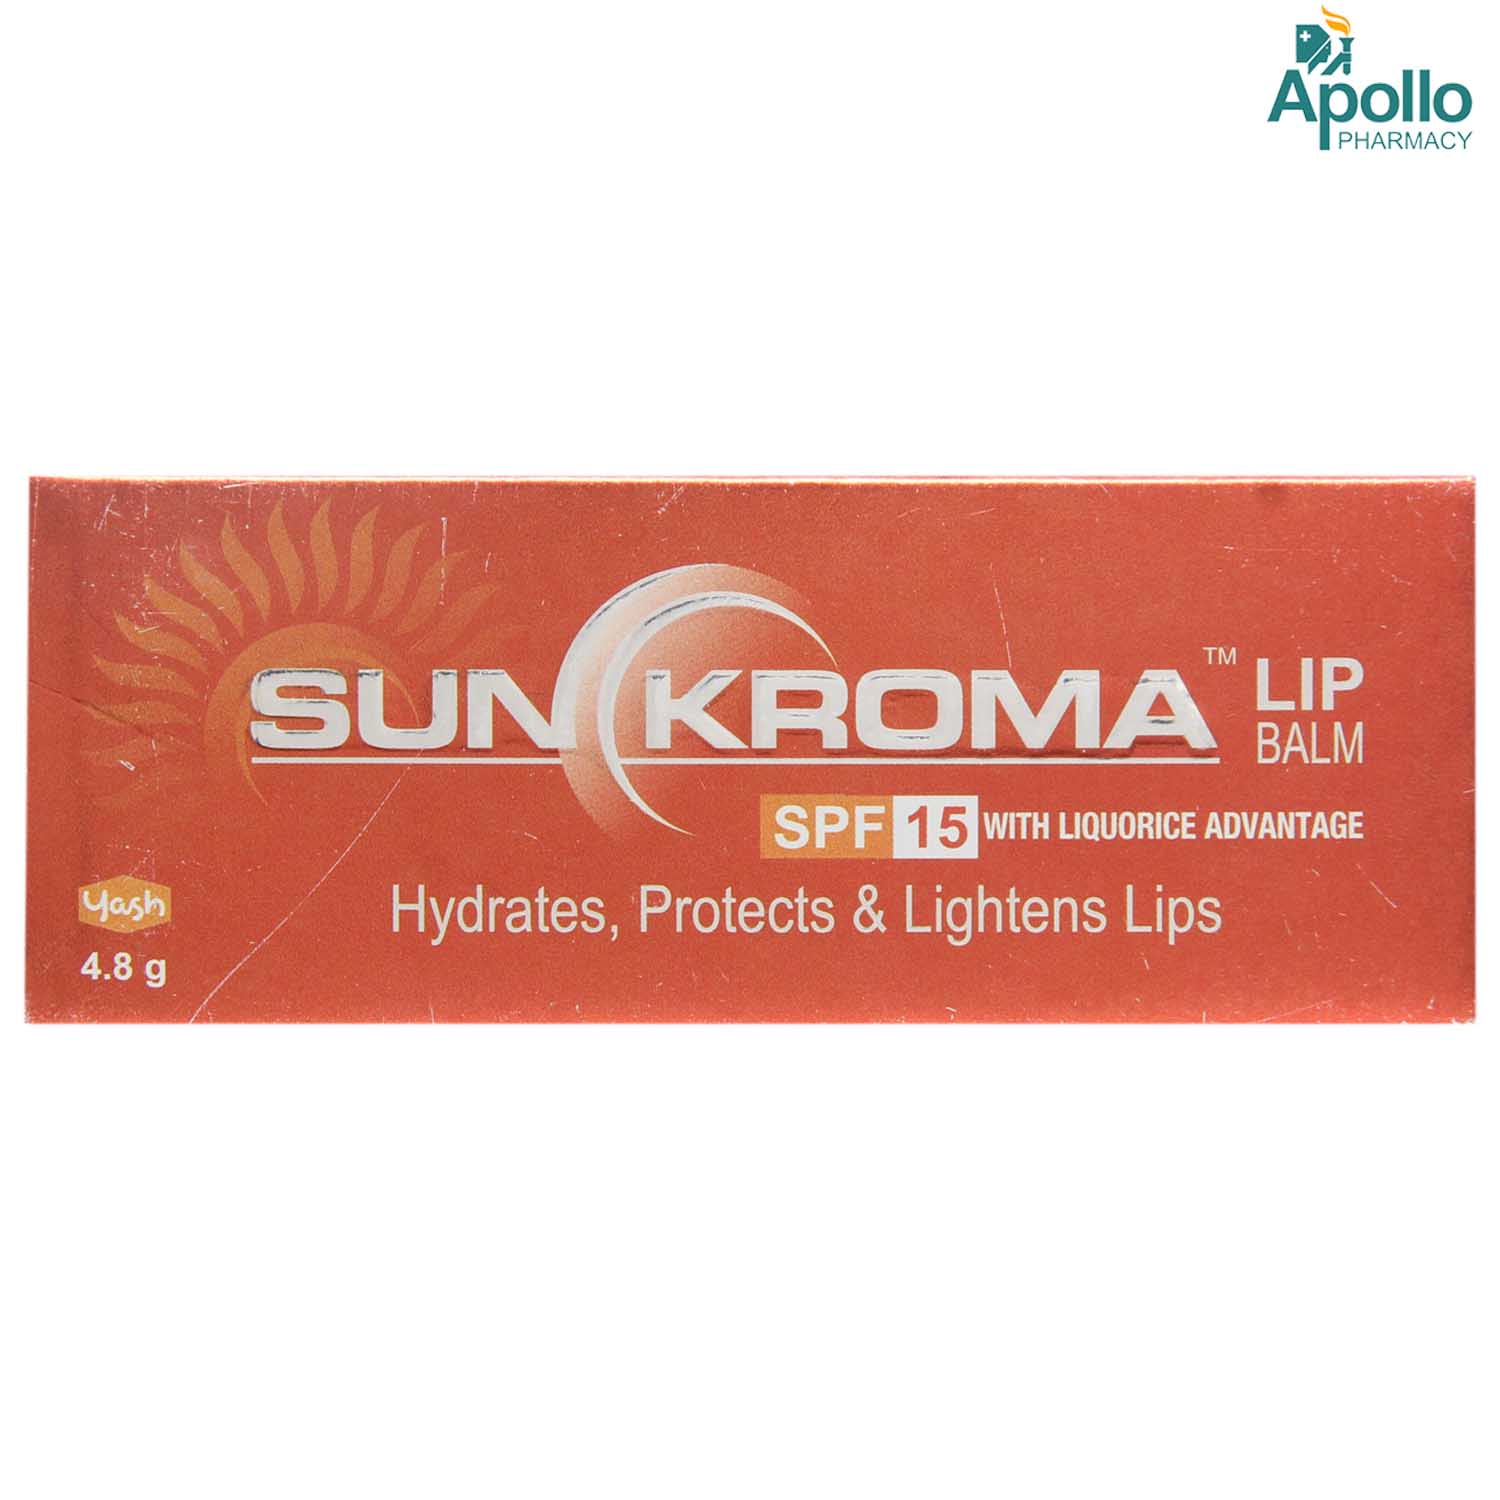 Sun Kroma SPF 15 Lip Balm 4.8 gm, Pack of 1 